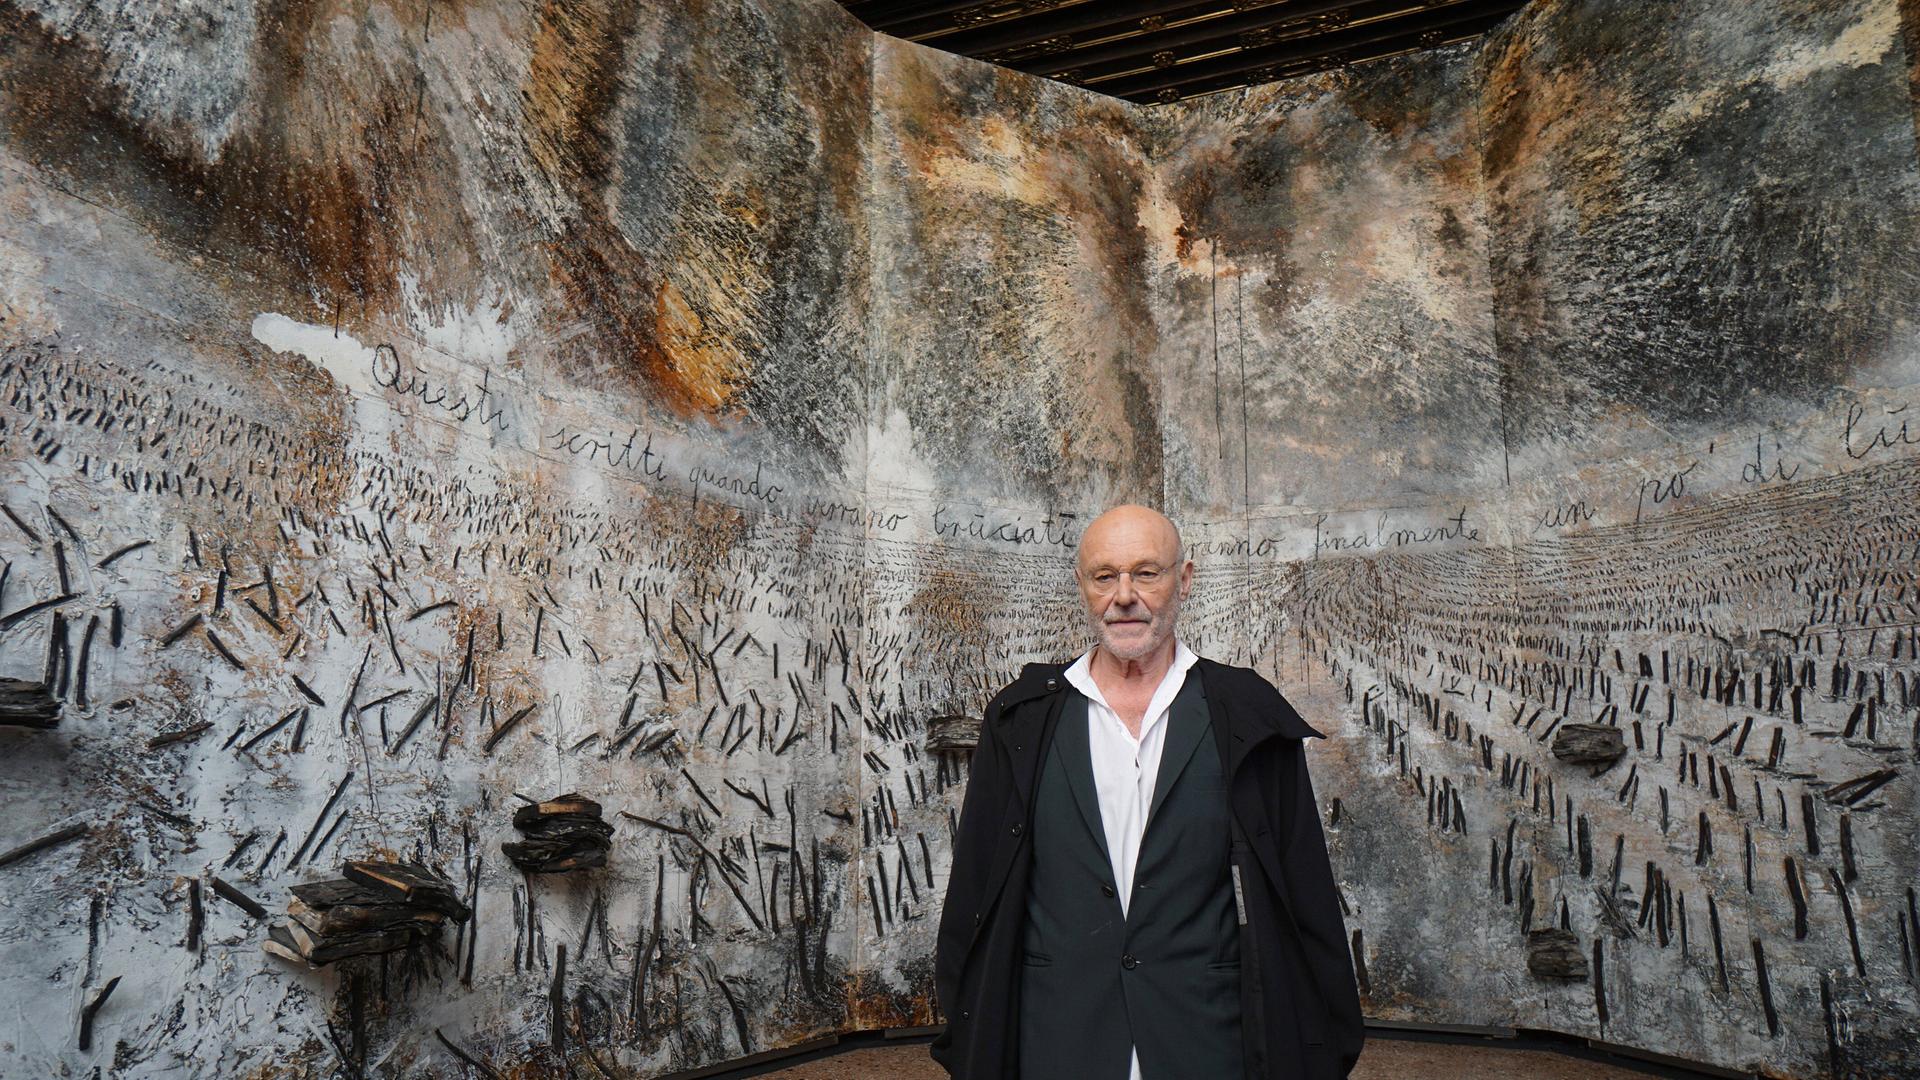 Künstler Anselm Kiefer vor seinem Werk "Questi scritti, quando verranno bruciati, daranno finalmente un po' di luce" im Dogenpalast in Venedig